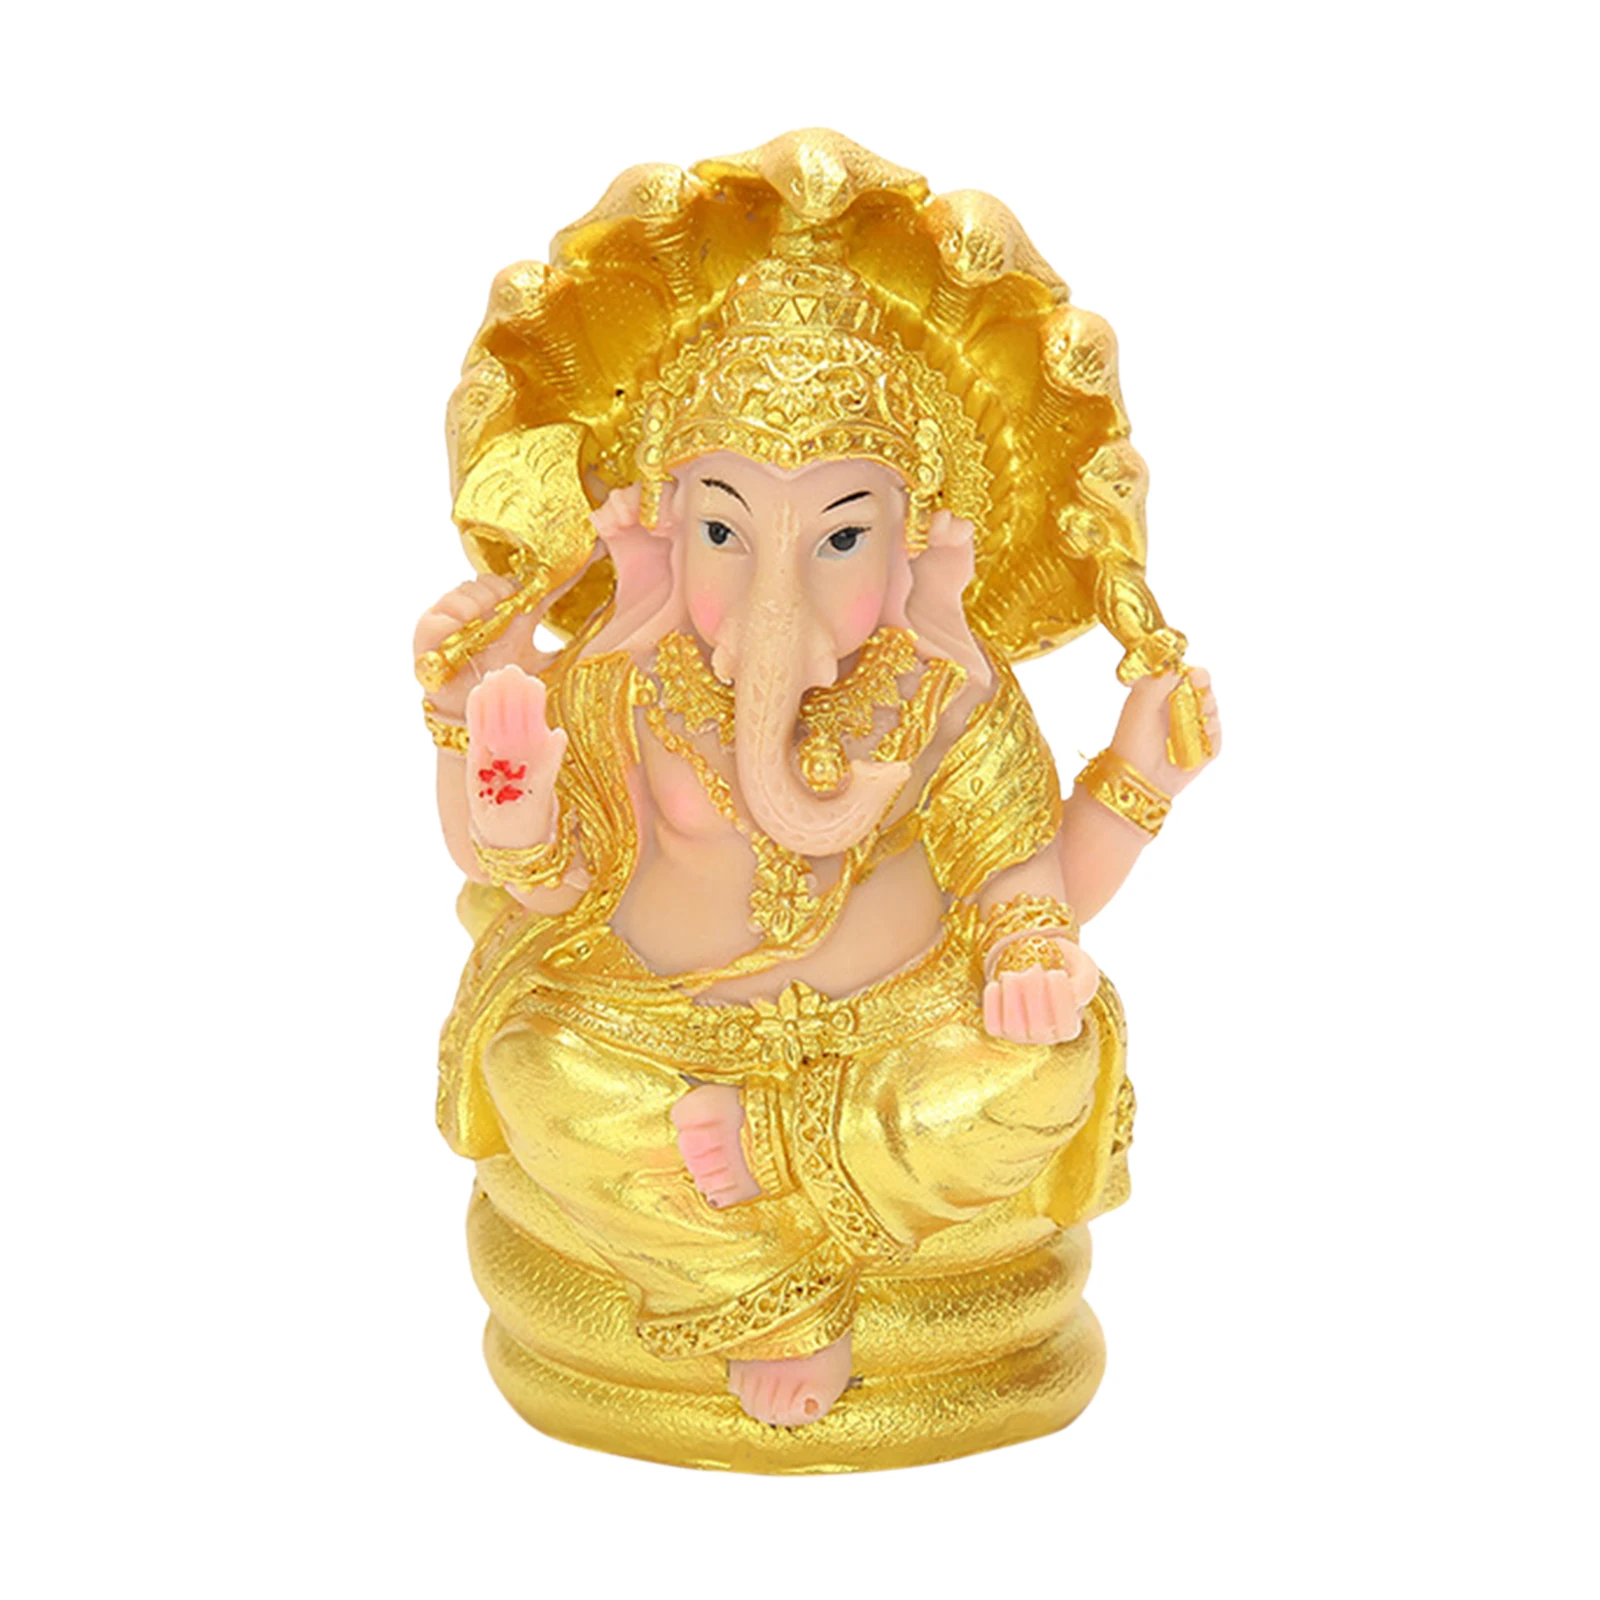 Collectible Ganesha Figurine Elephant God Buddha Office Mandir Diwali Decor